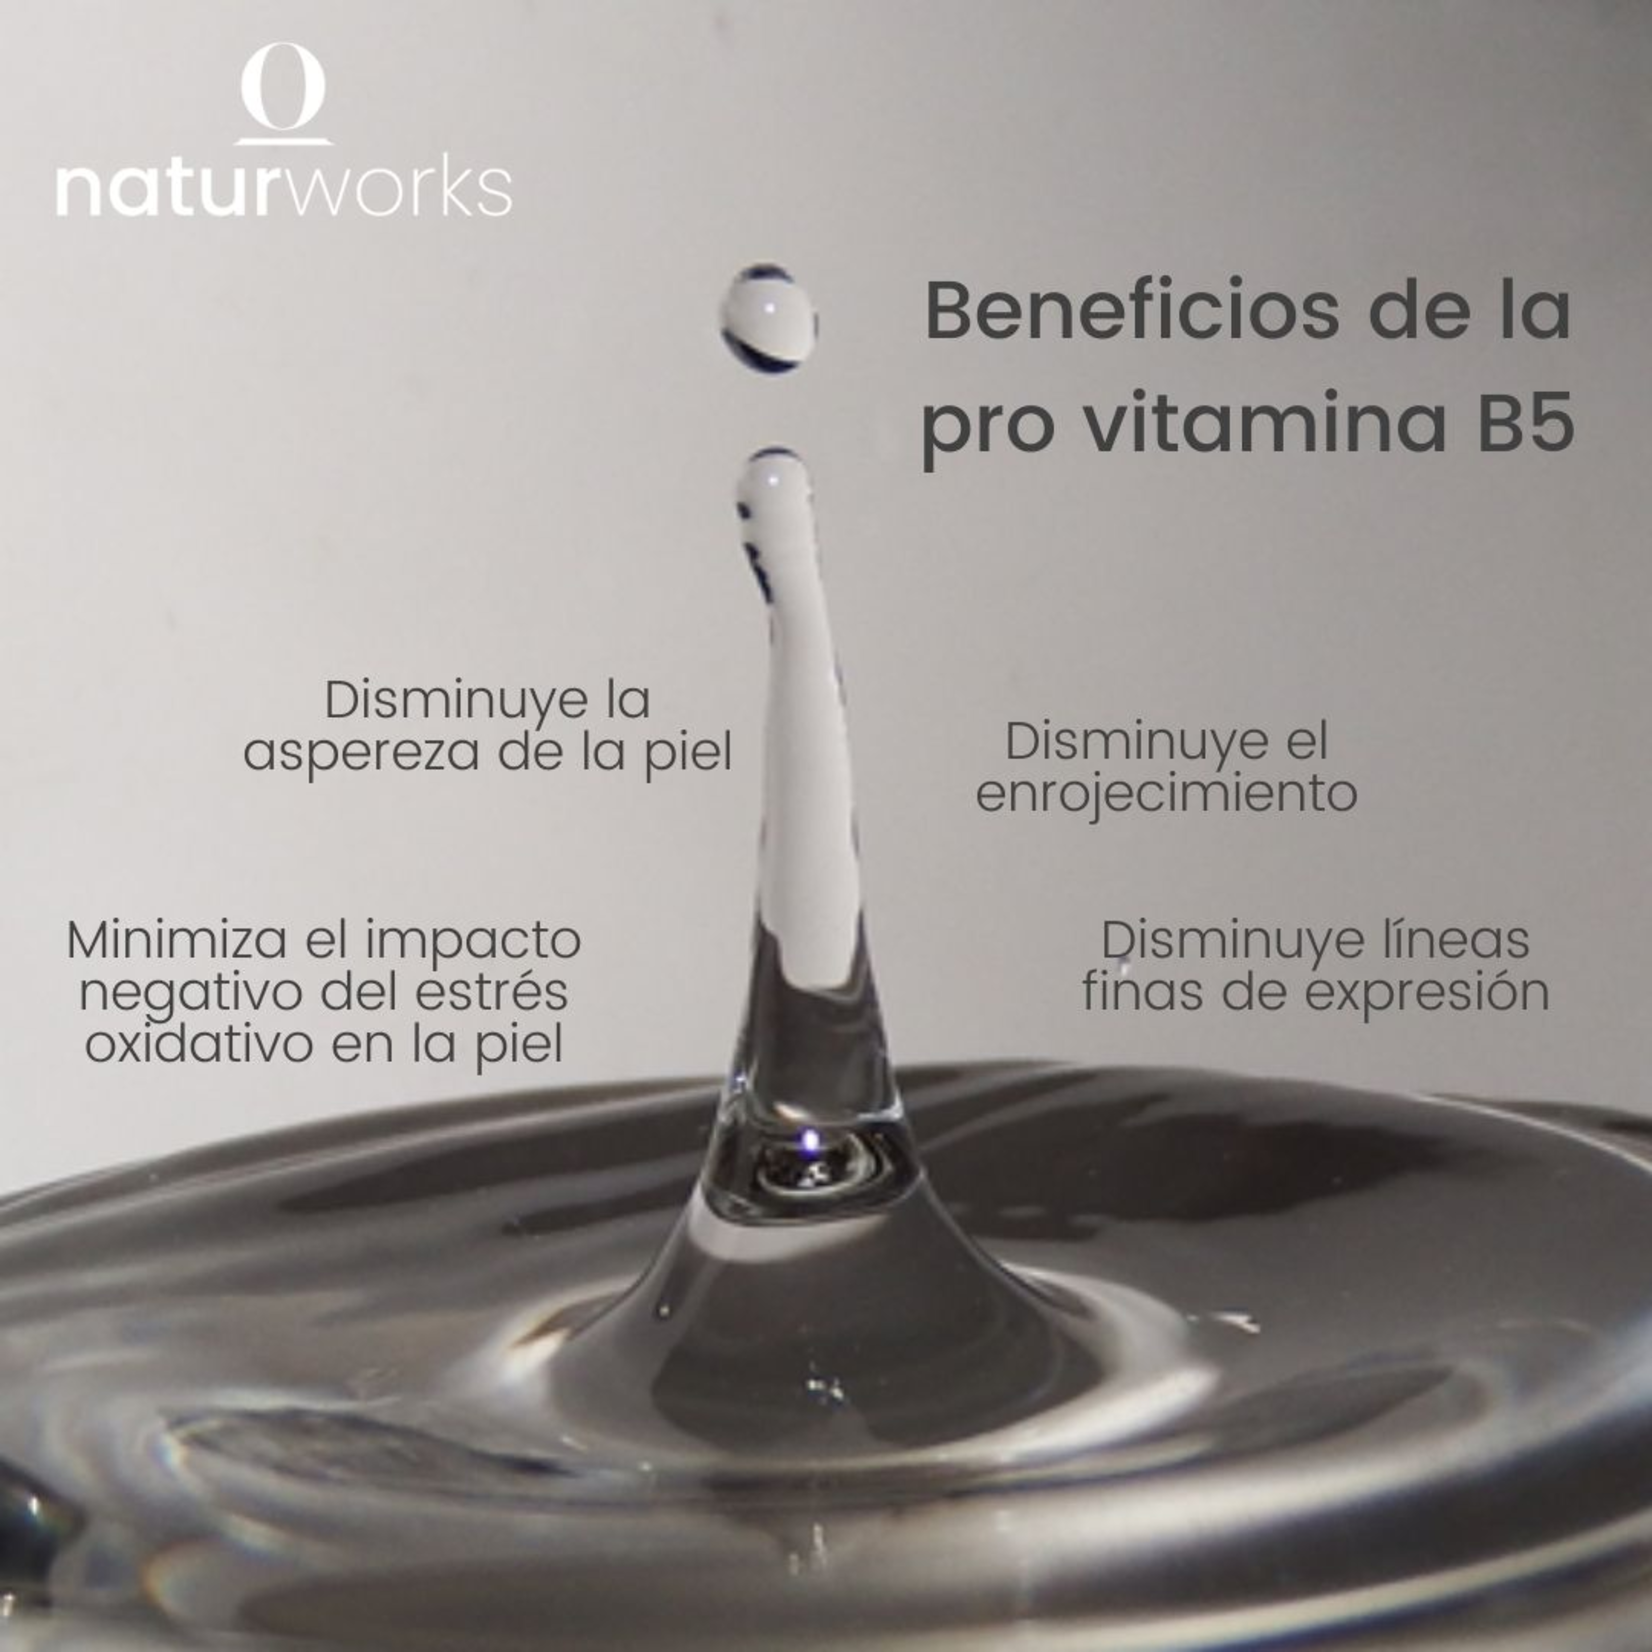 Naturworks Tratamiento capilar Naturworks Anticaida con pro vitamina B5 240 ml